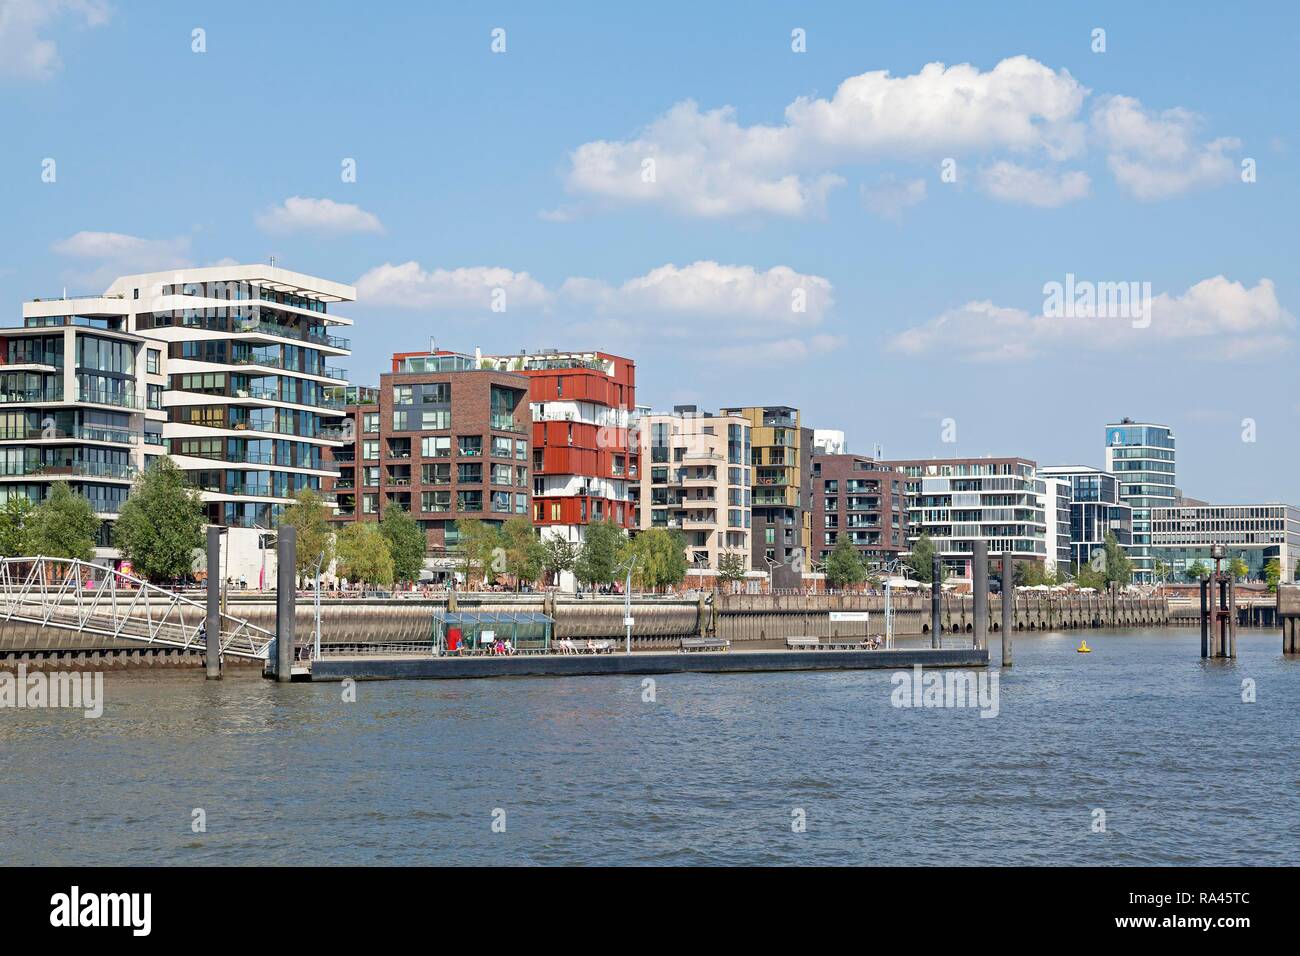 Dalmannkai, HafenCity, Hamburgo, Alemania. Foto de stock